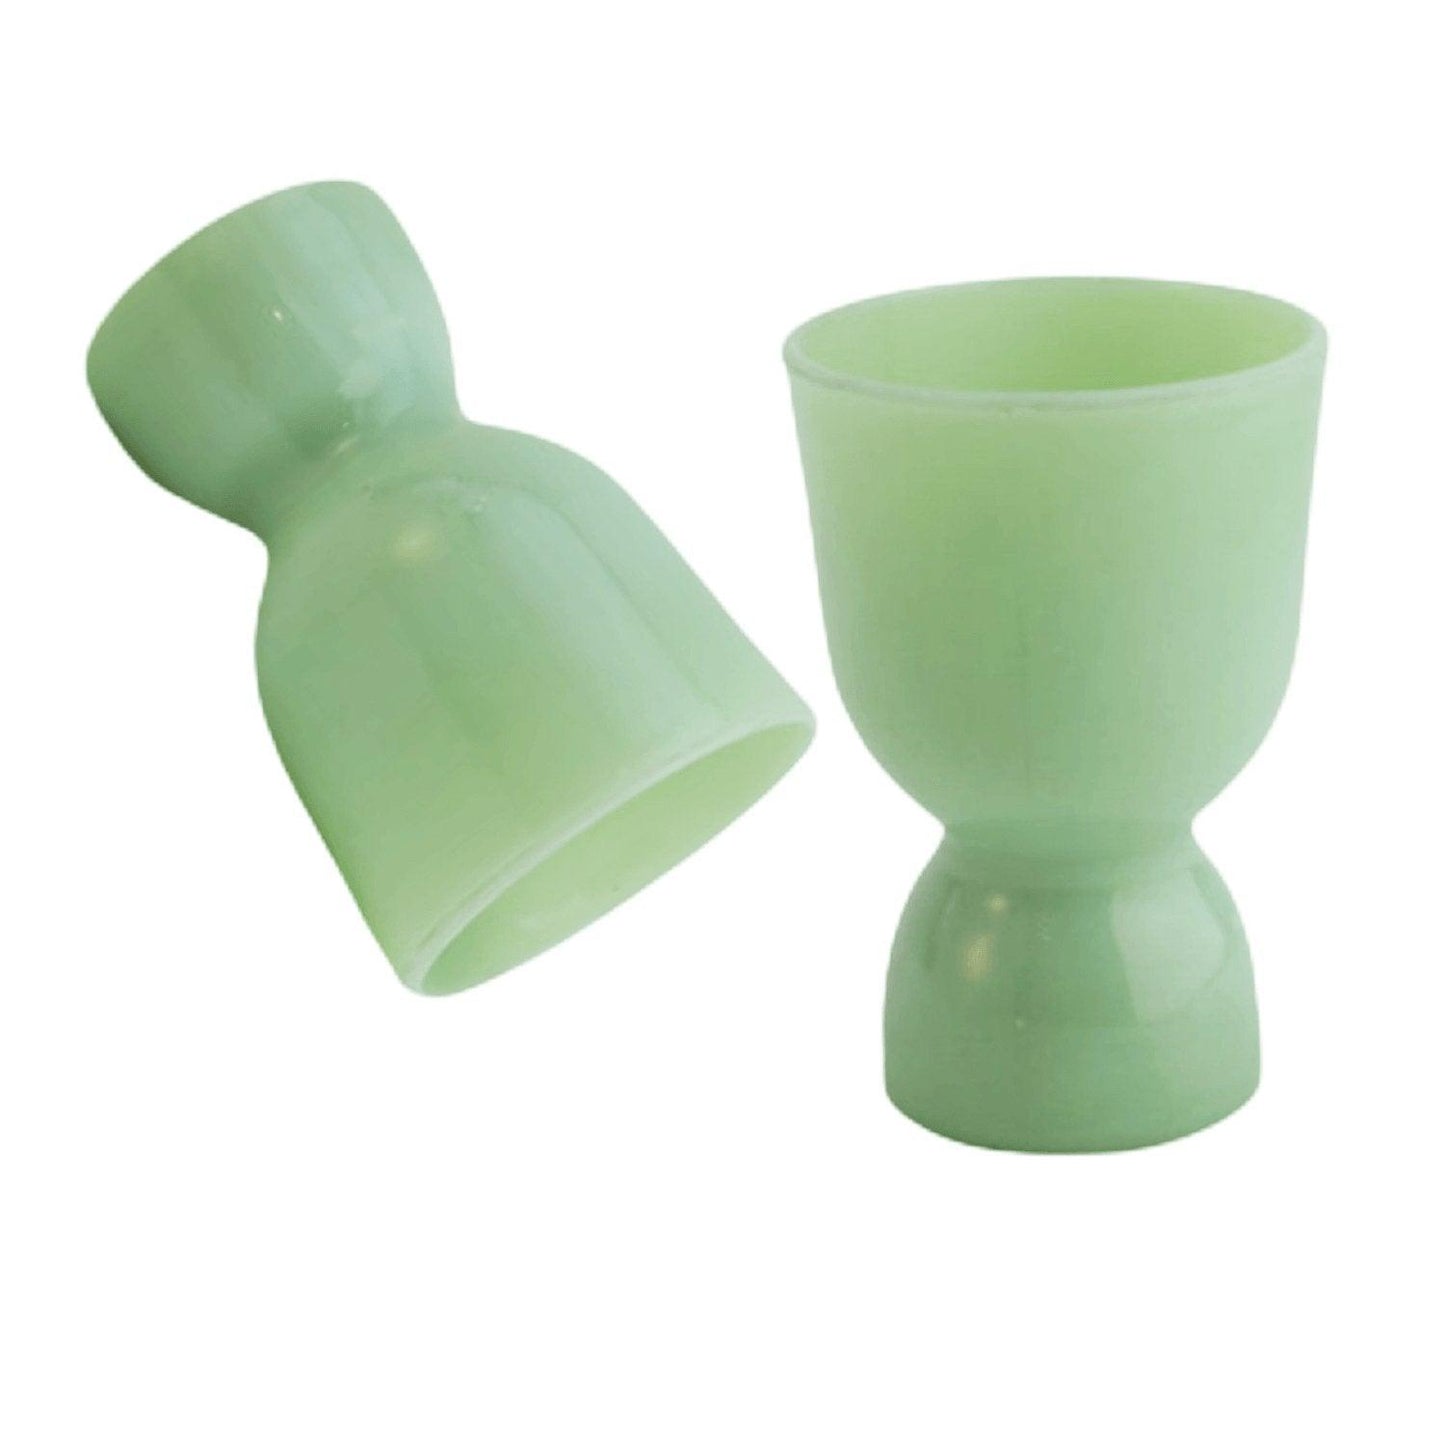 Shop Jadeite Glass Egg Cups